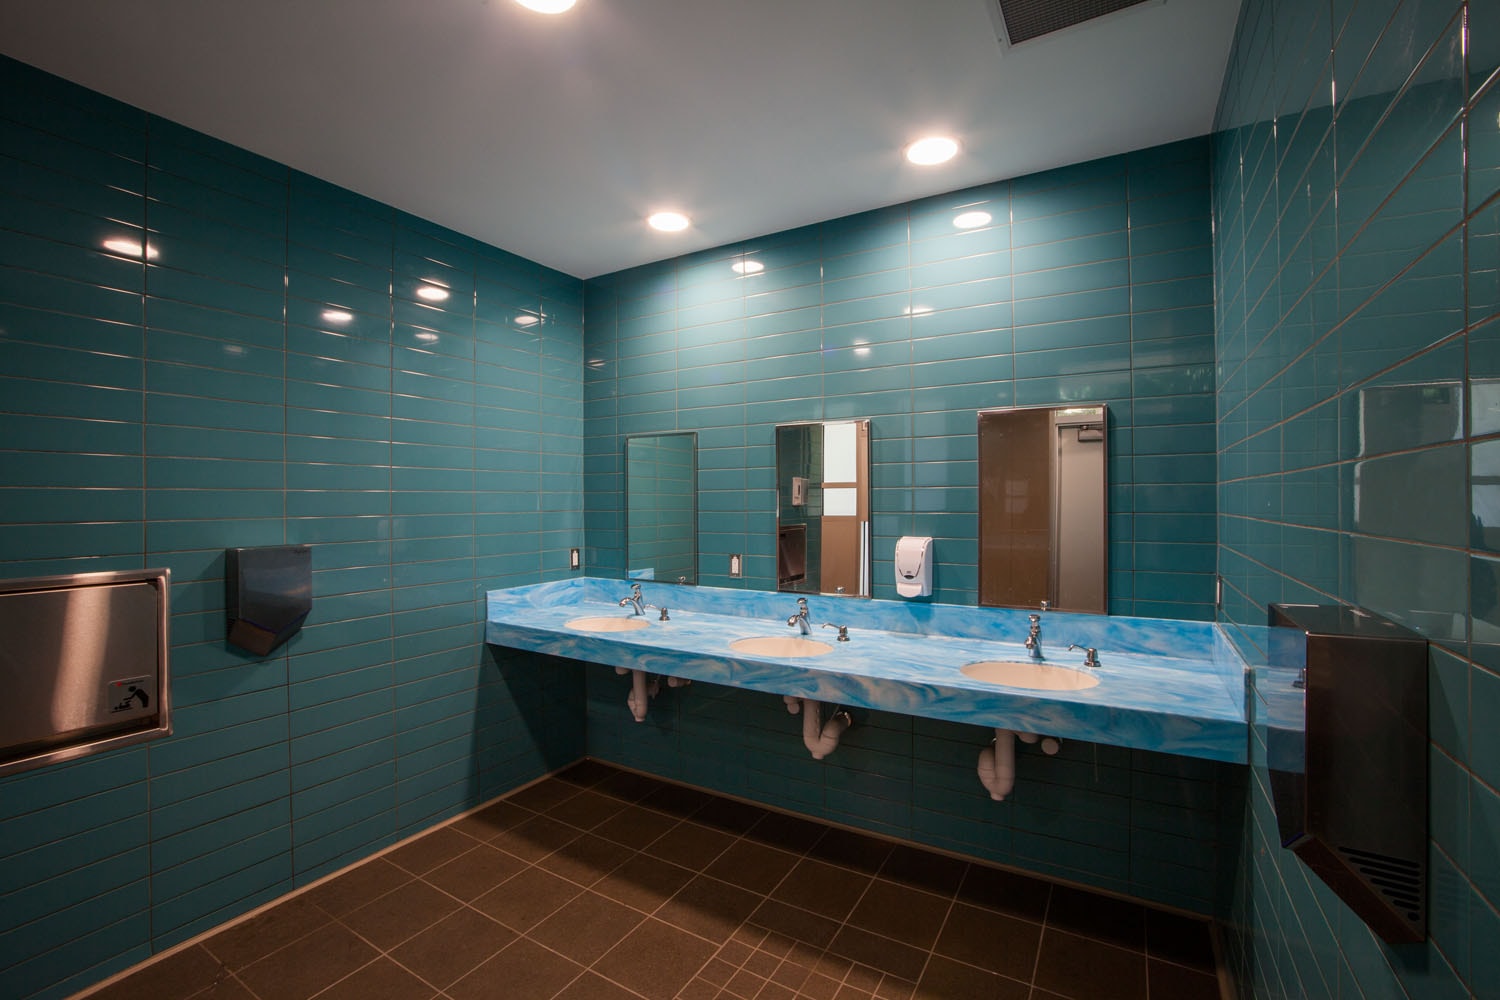 3 blue sinks in washroom